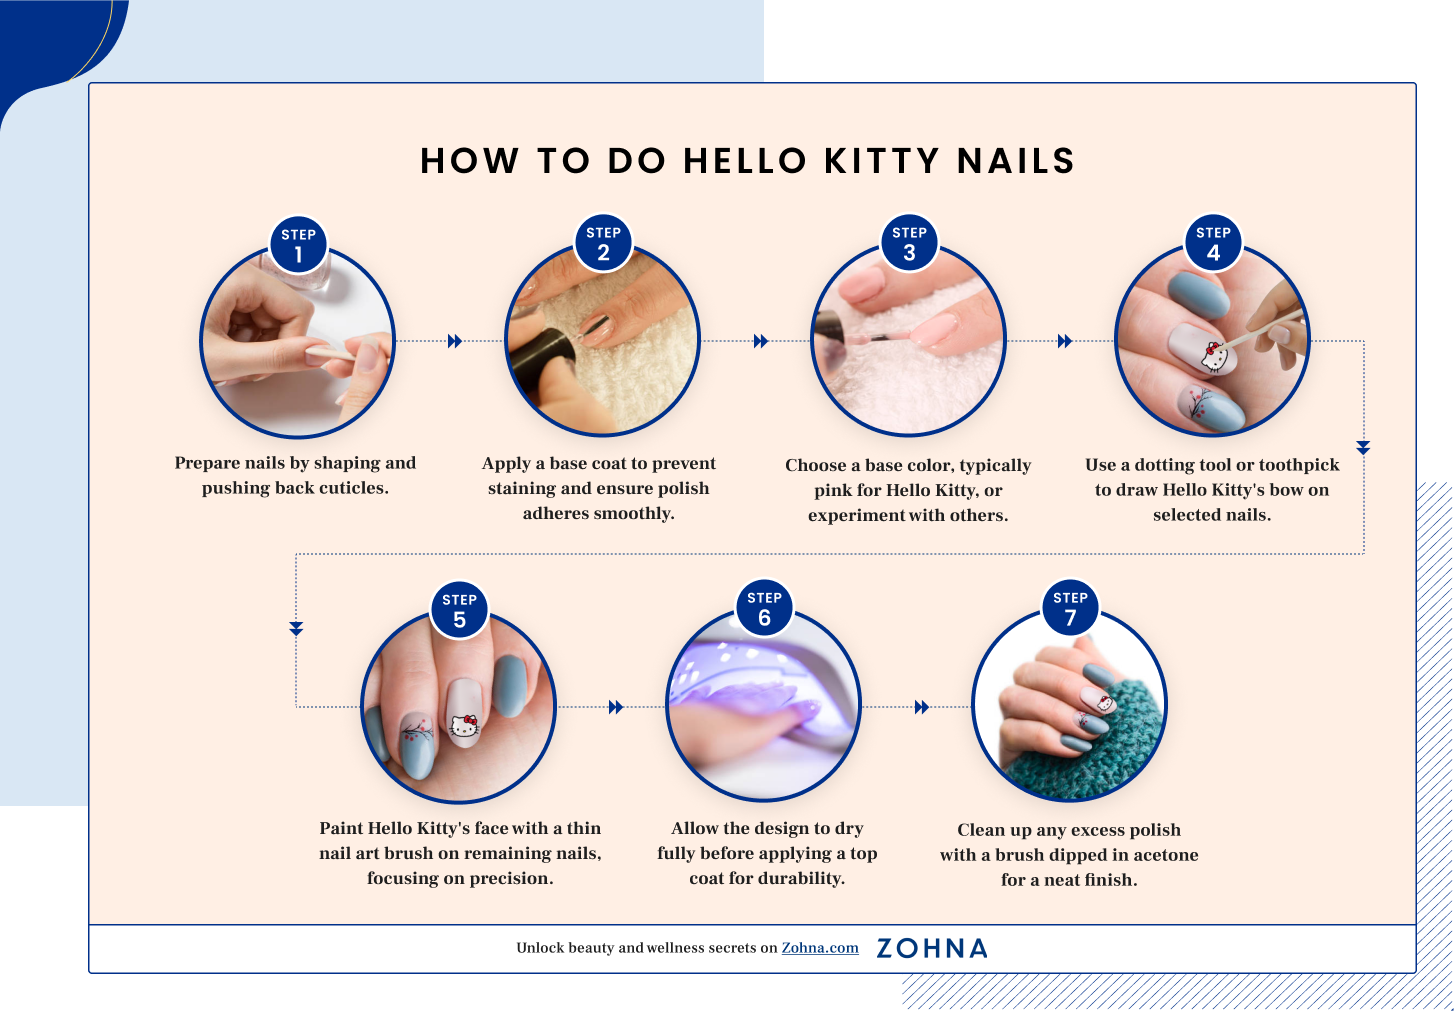 How to Do Hello Kitty Nails